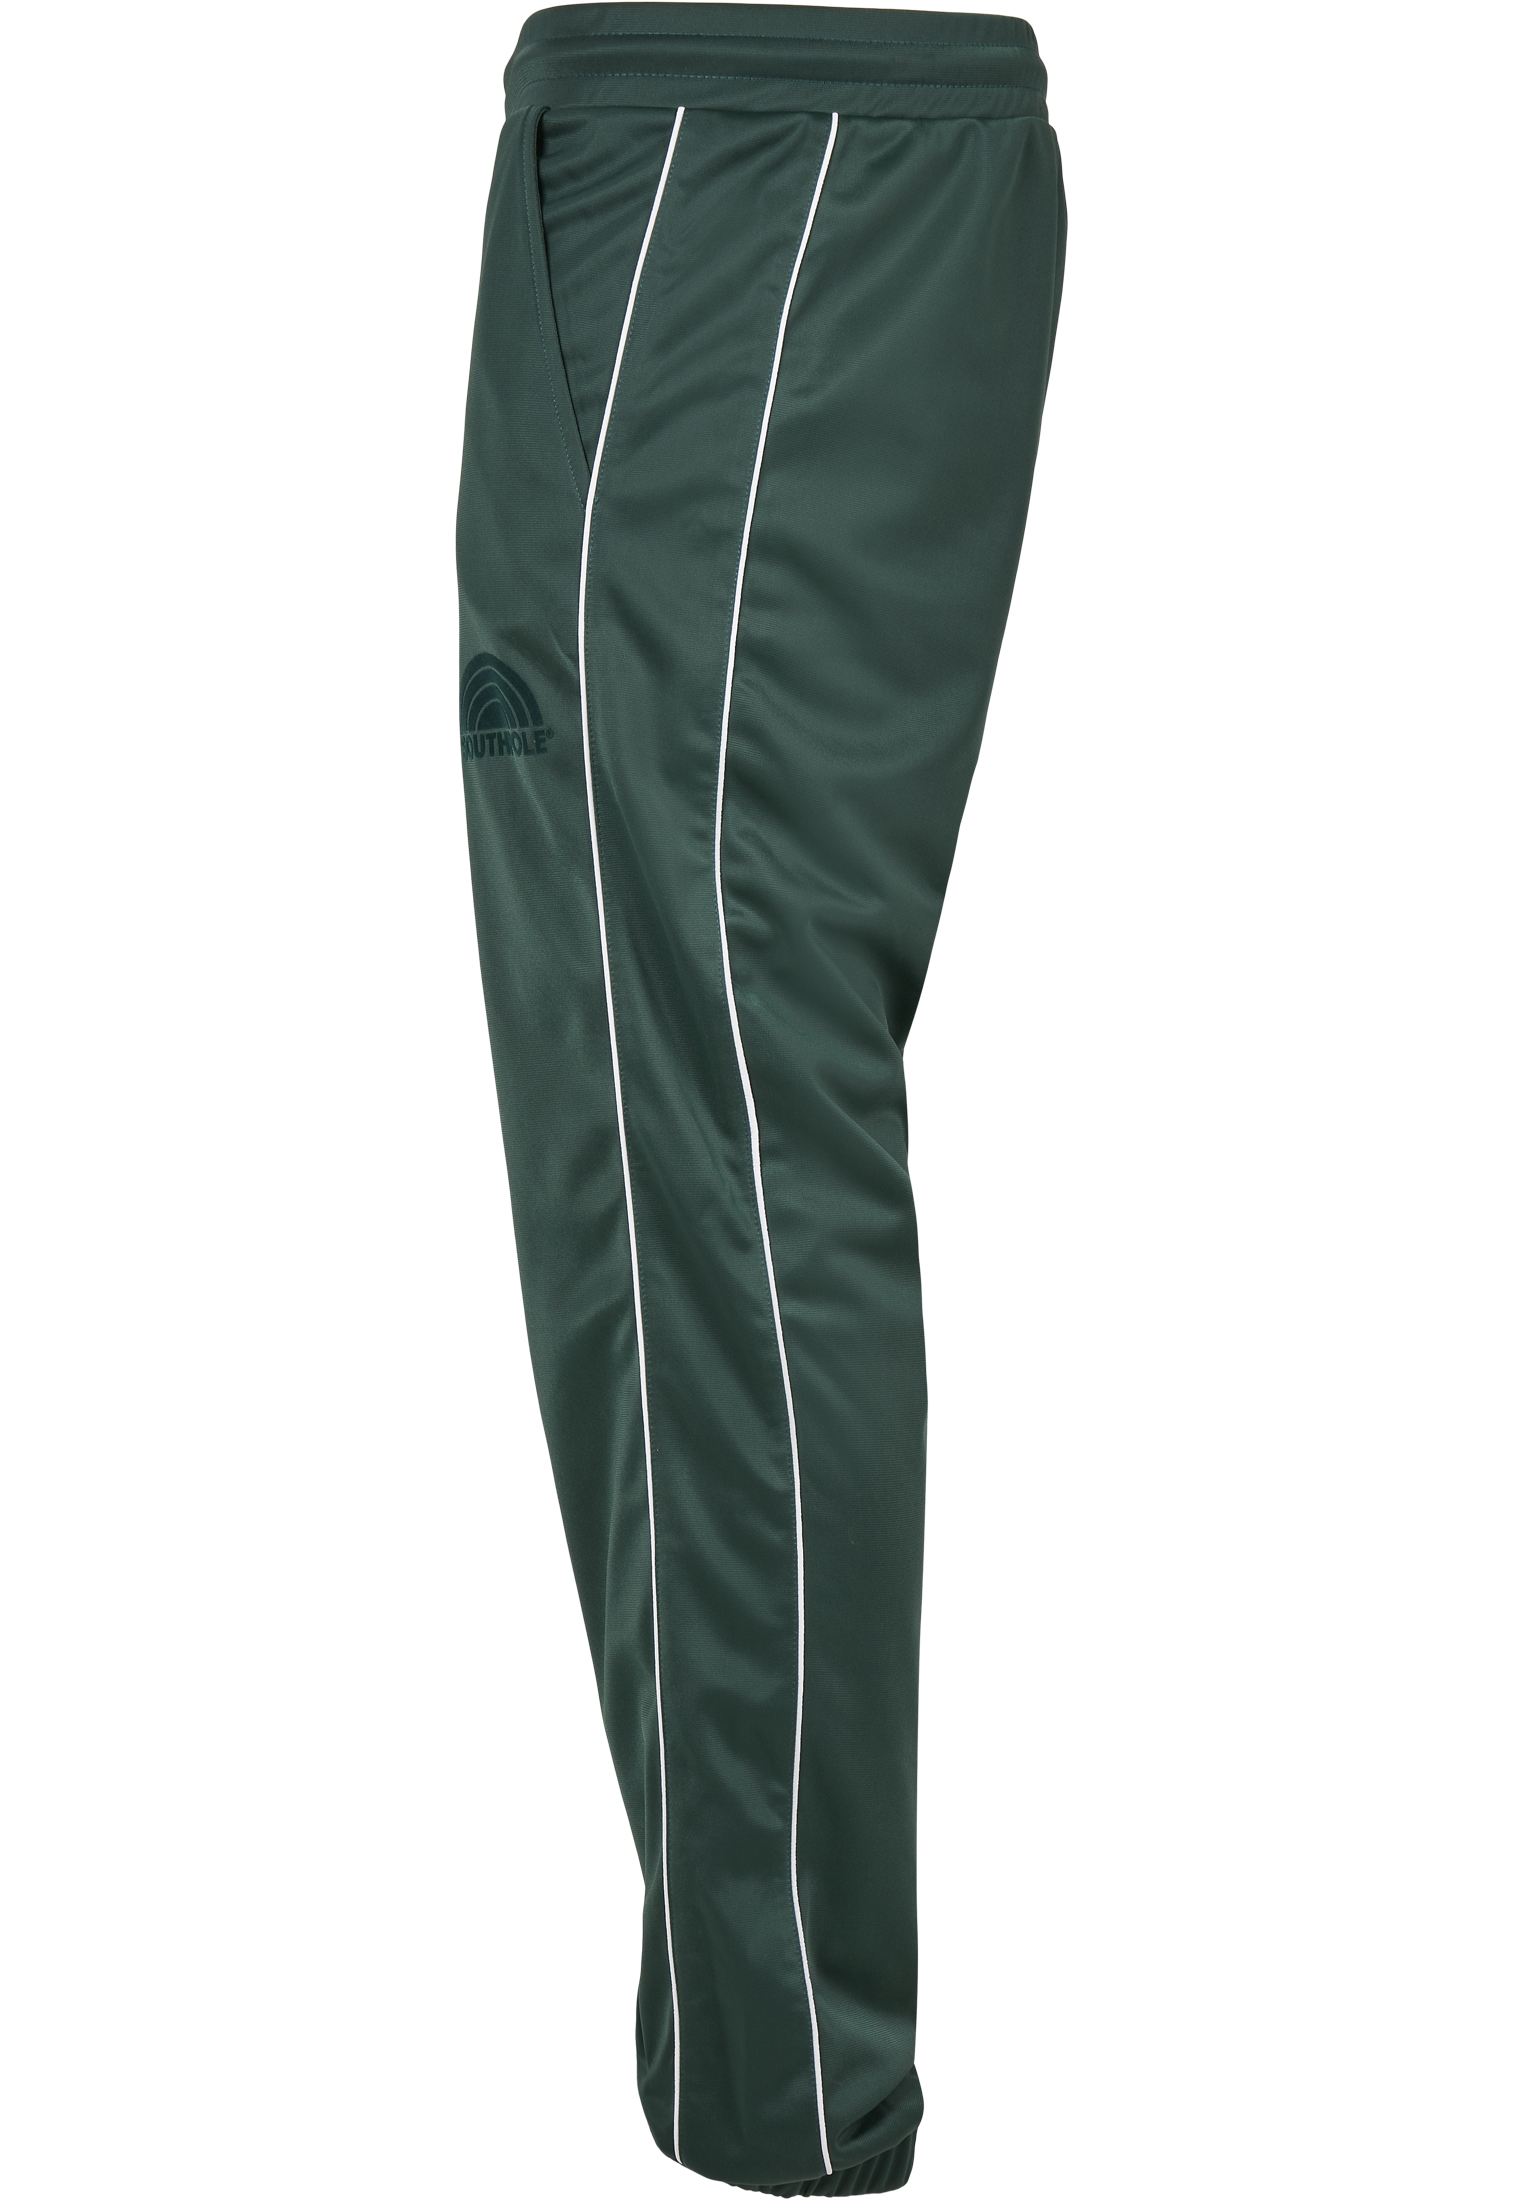 Saisonware Southpole Tricot Pants in Farbe darkfreshgreen